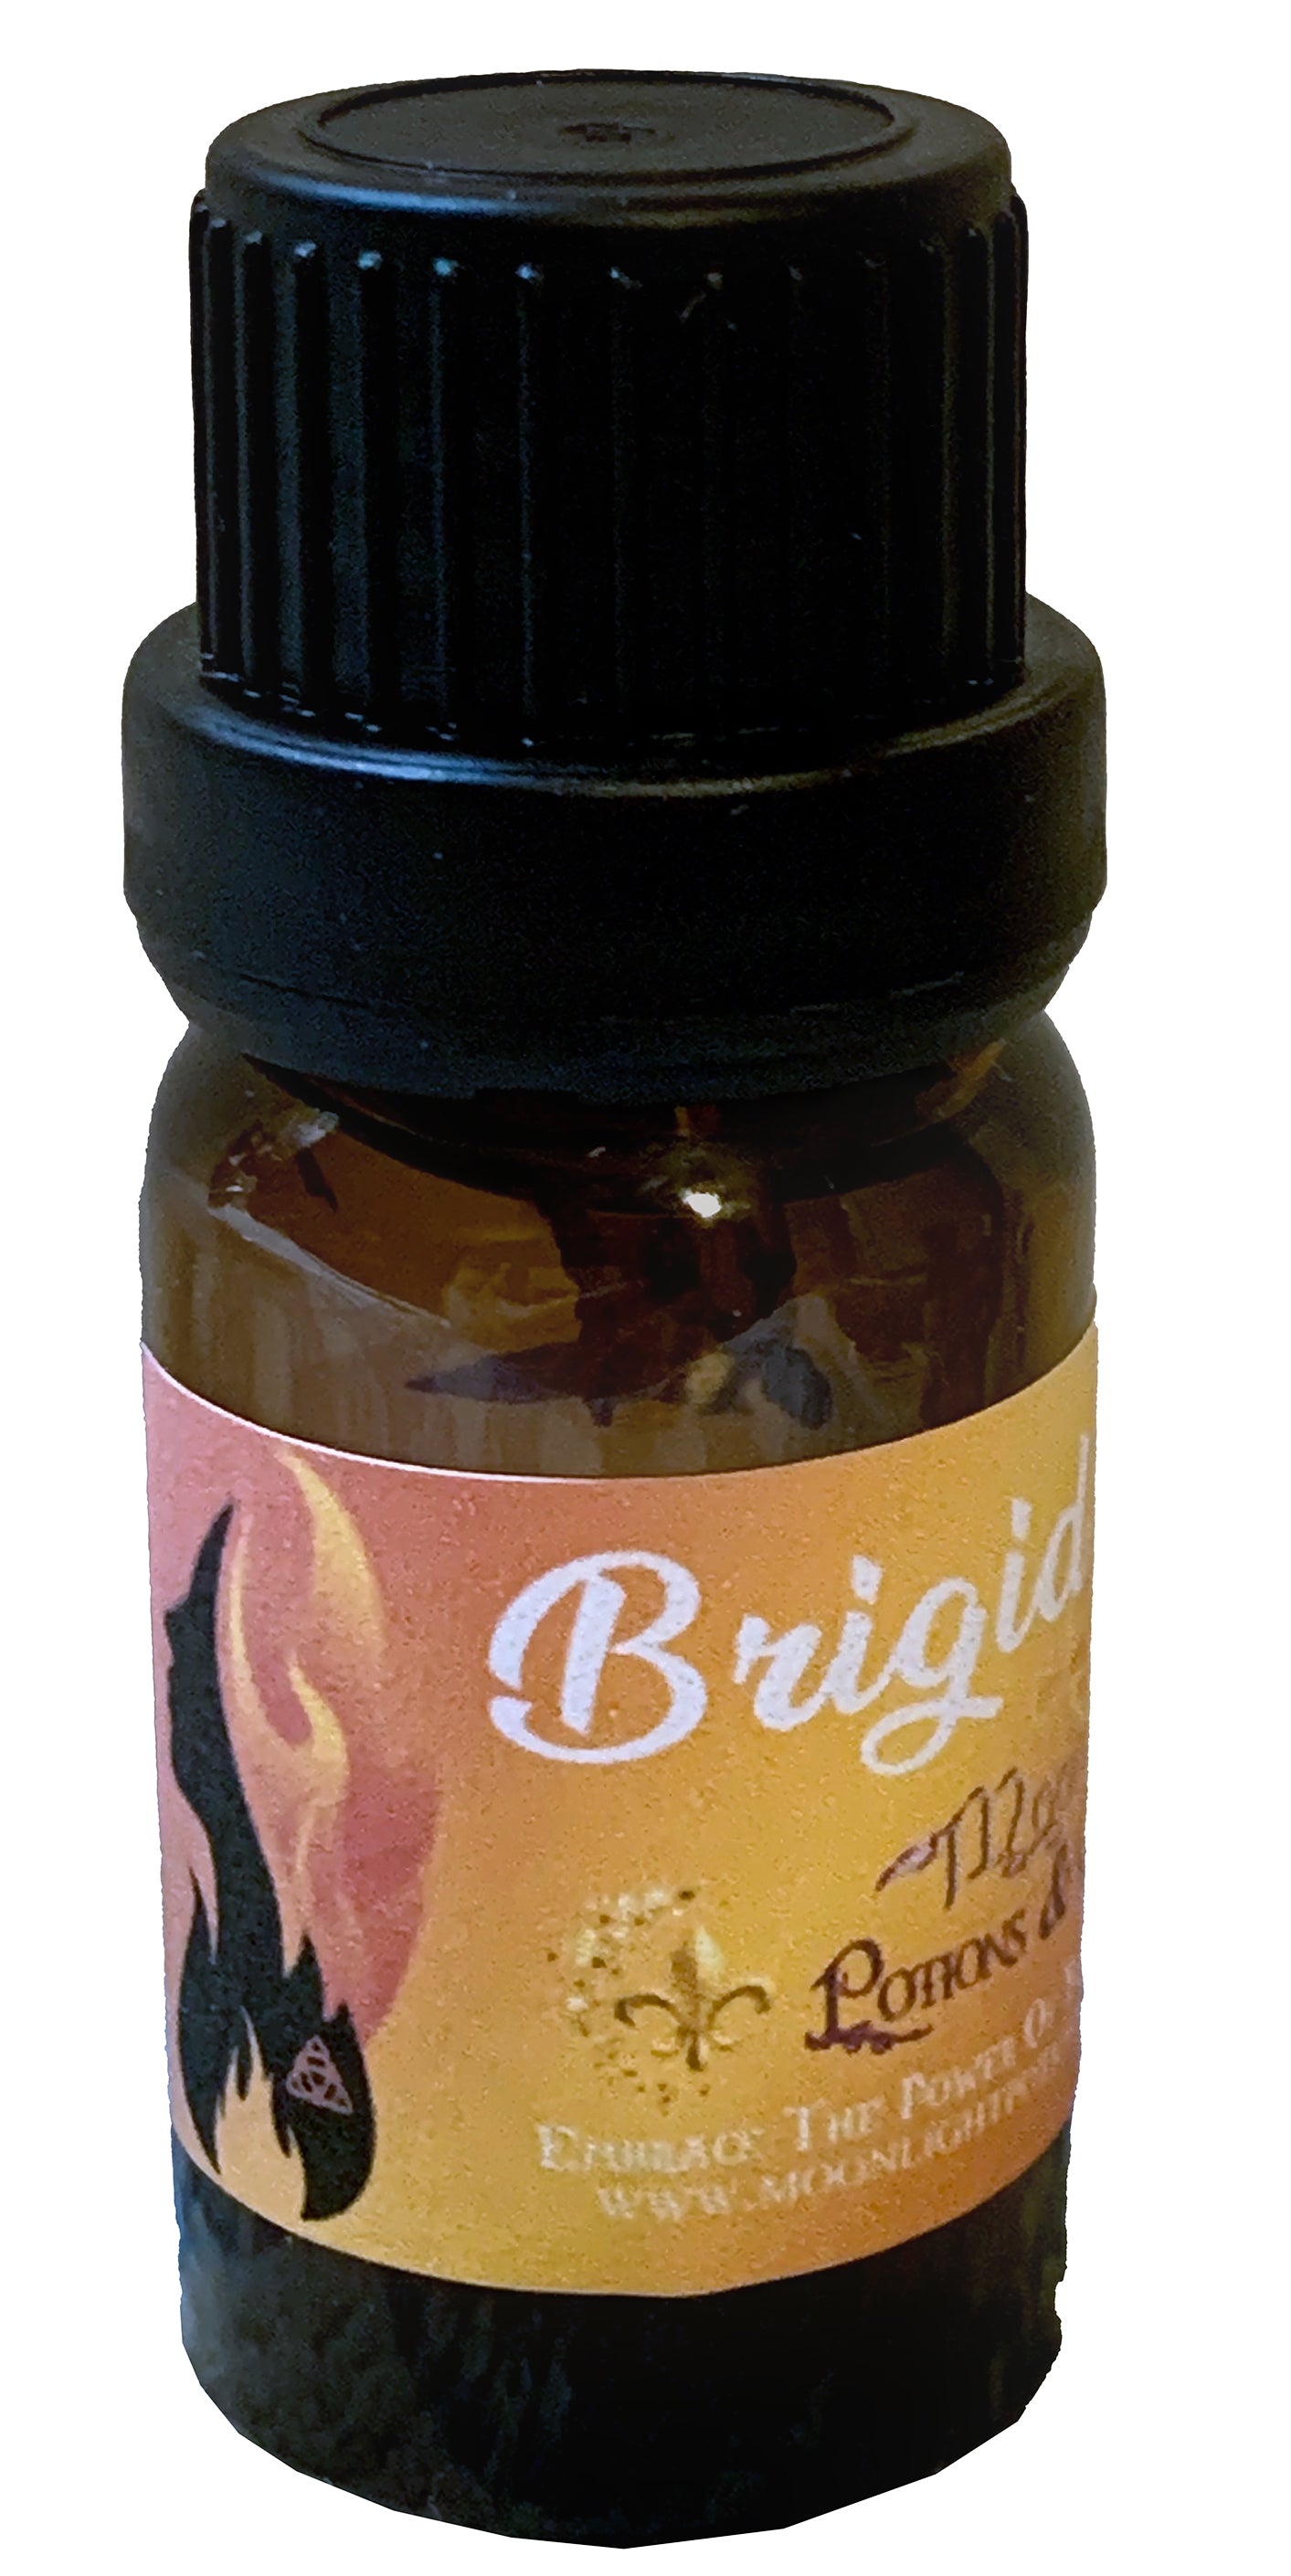 Brigid Oil - Moonlight Potion s& Charms